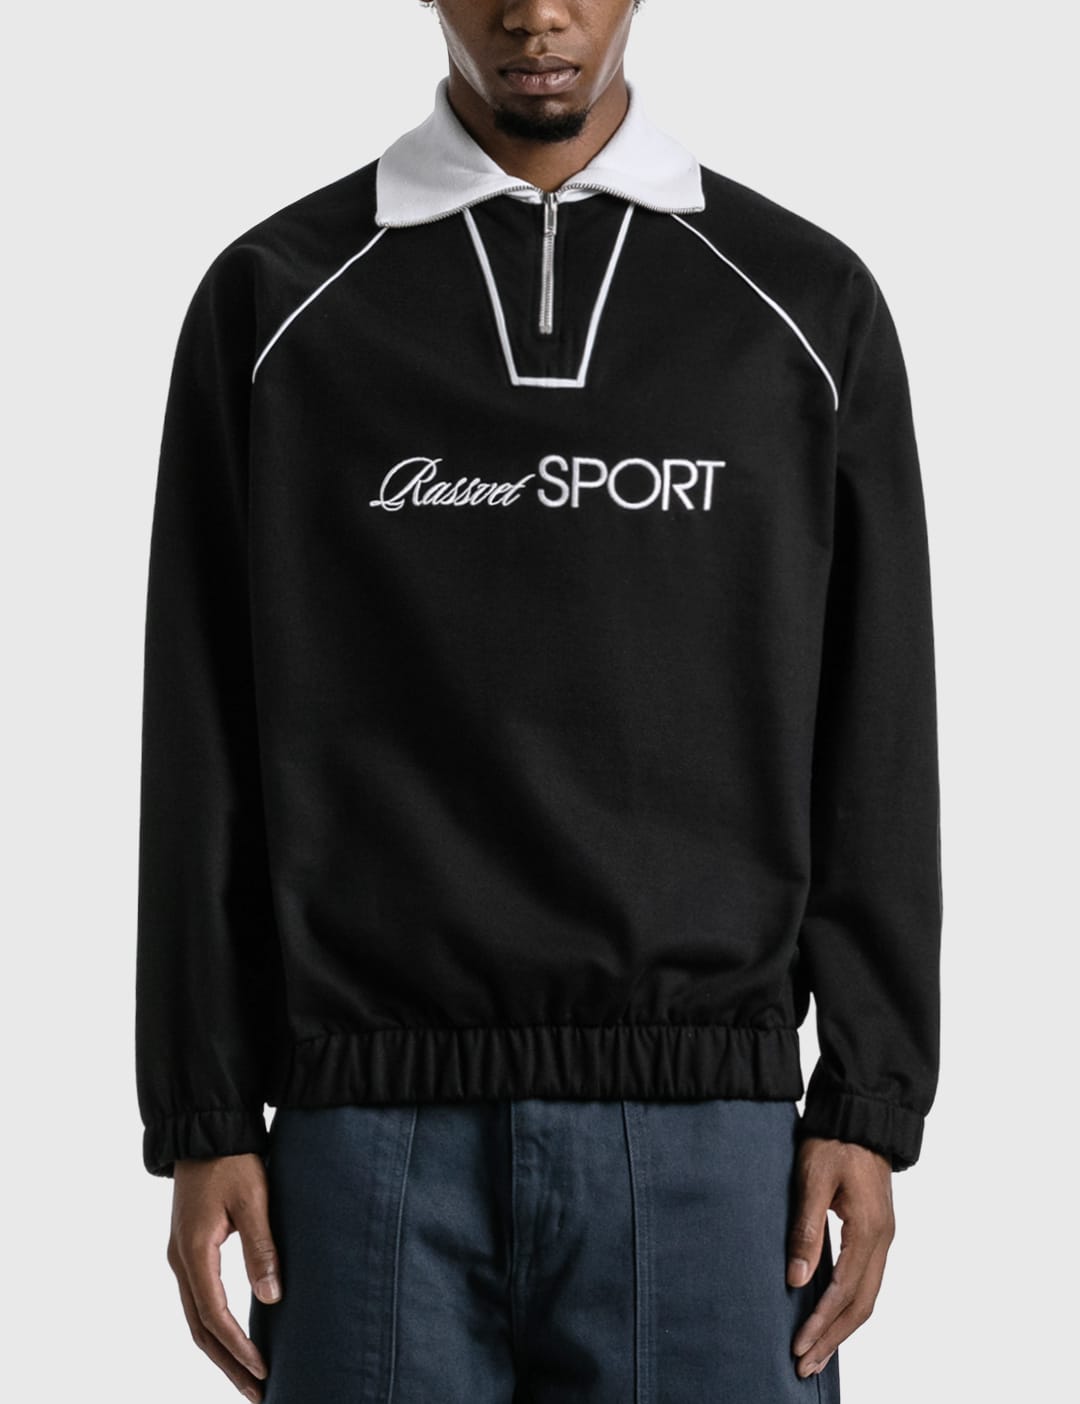 Rassvet - Rassvet Sport Collared Sweatshirt | HBX - Globally